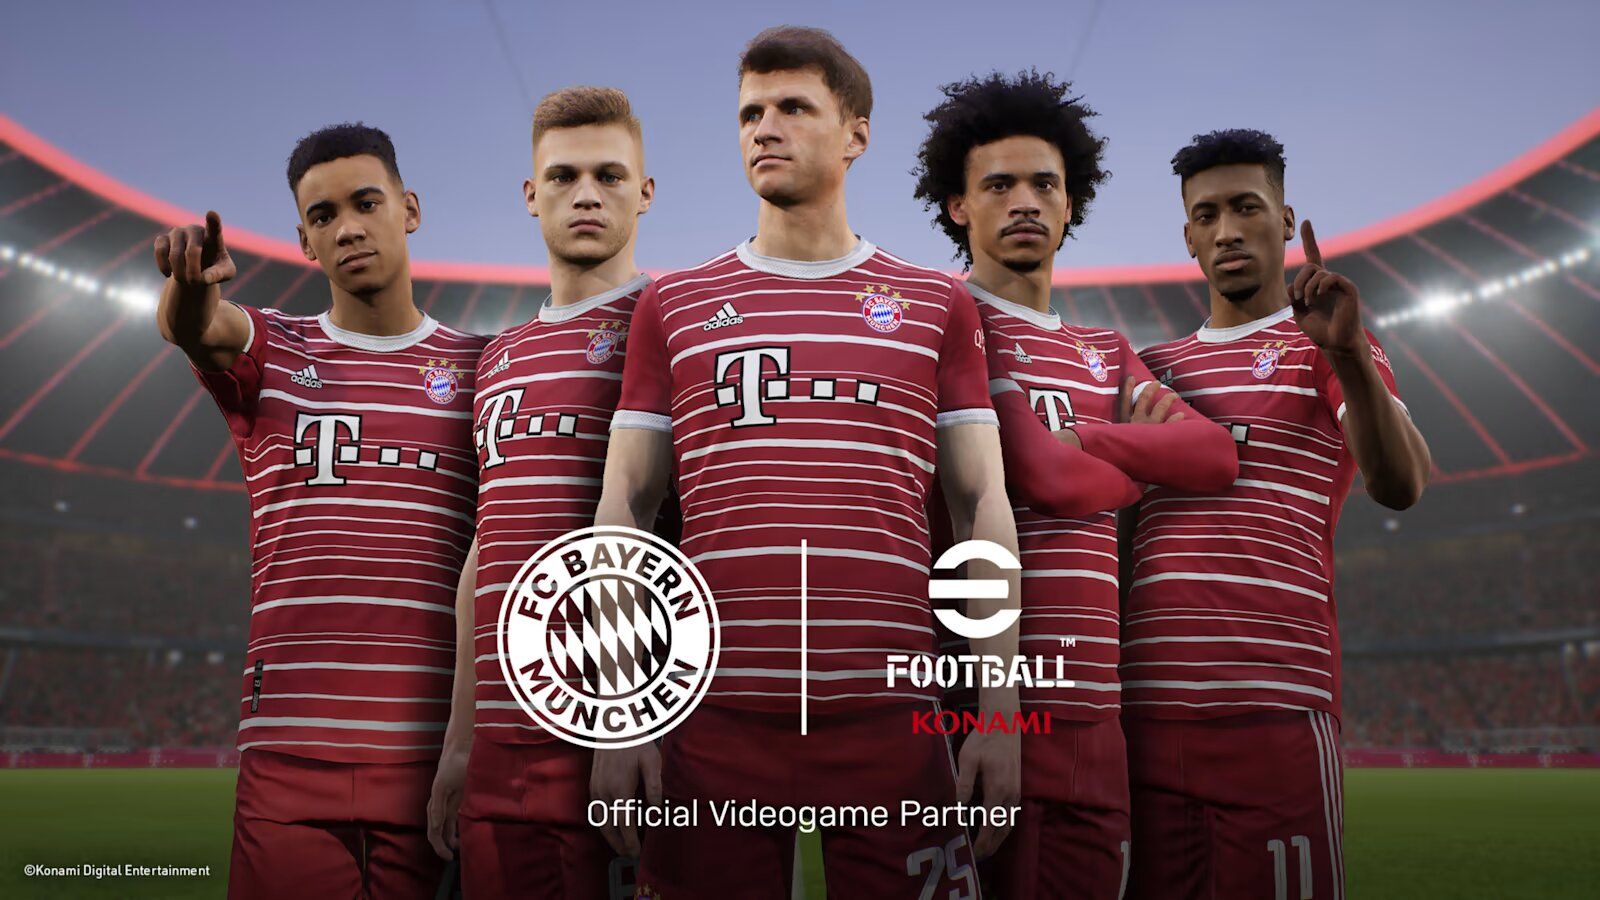 eFootball gmeplay footage showing Bayern Munich